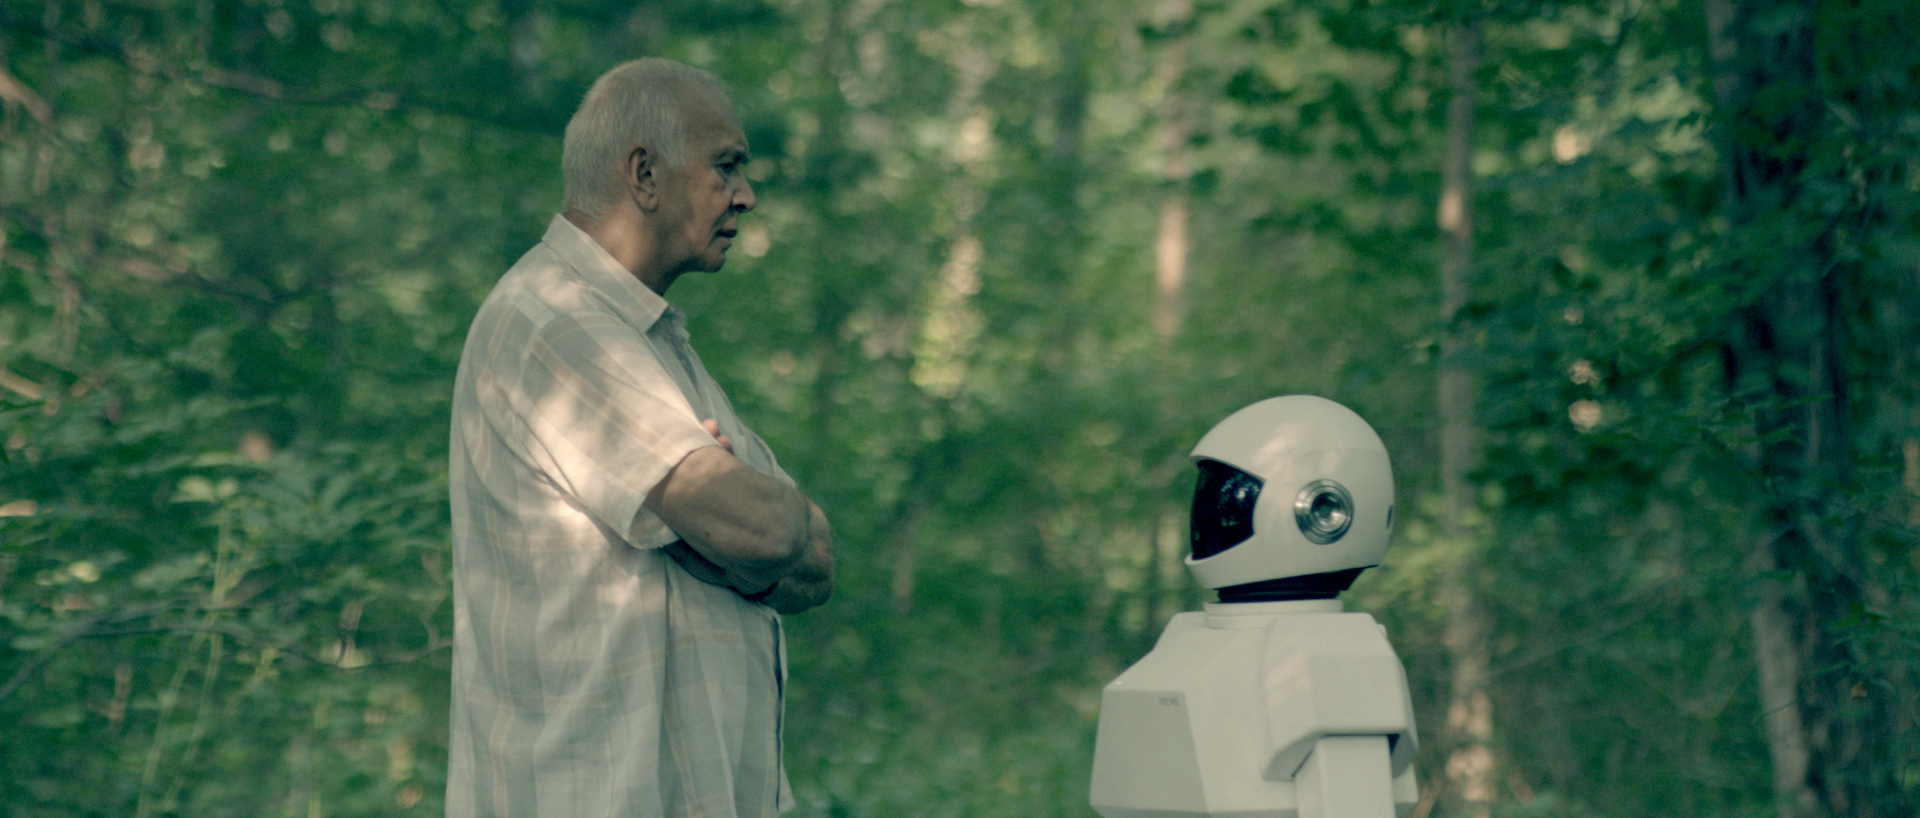 Robot & Frank - Robot & Frank (2012)